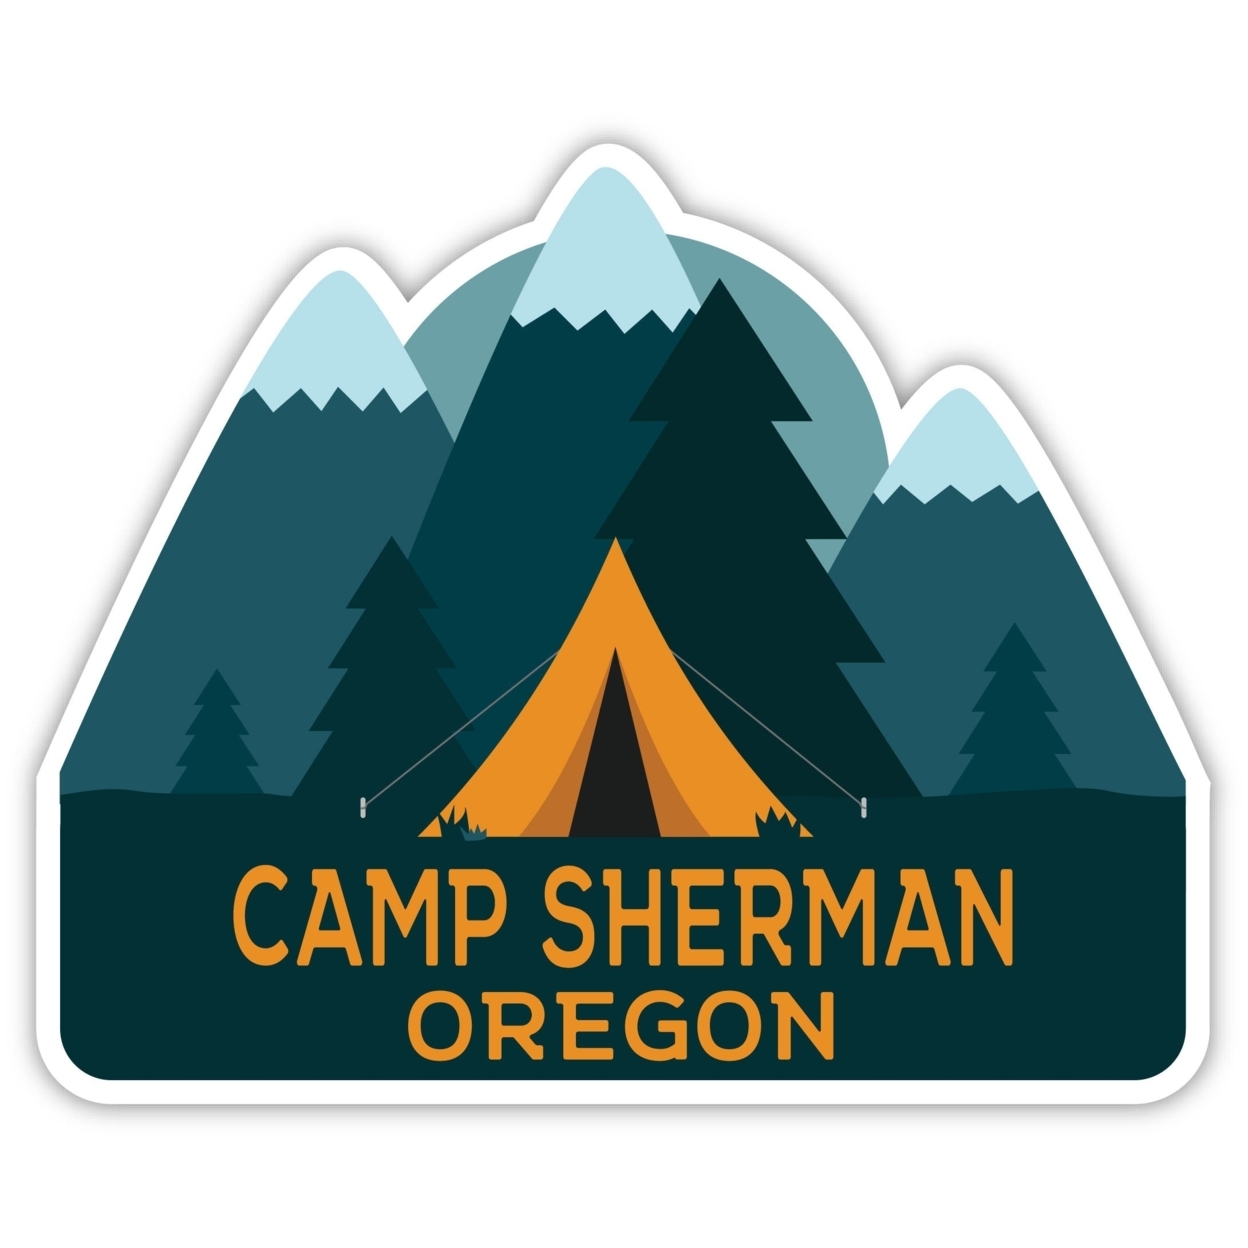 Camp Sherman Oregon Souvenir Decorative Stickers (Choose Theme And Size) - 4-Pack, 12-Inch, Tent